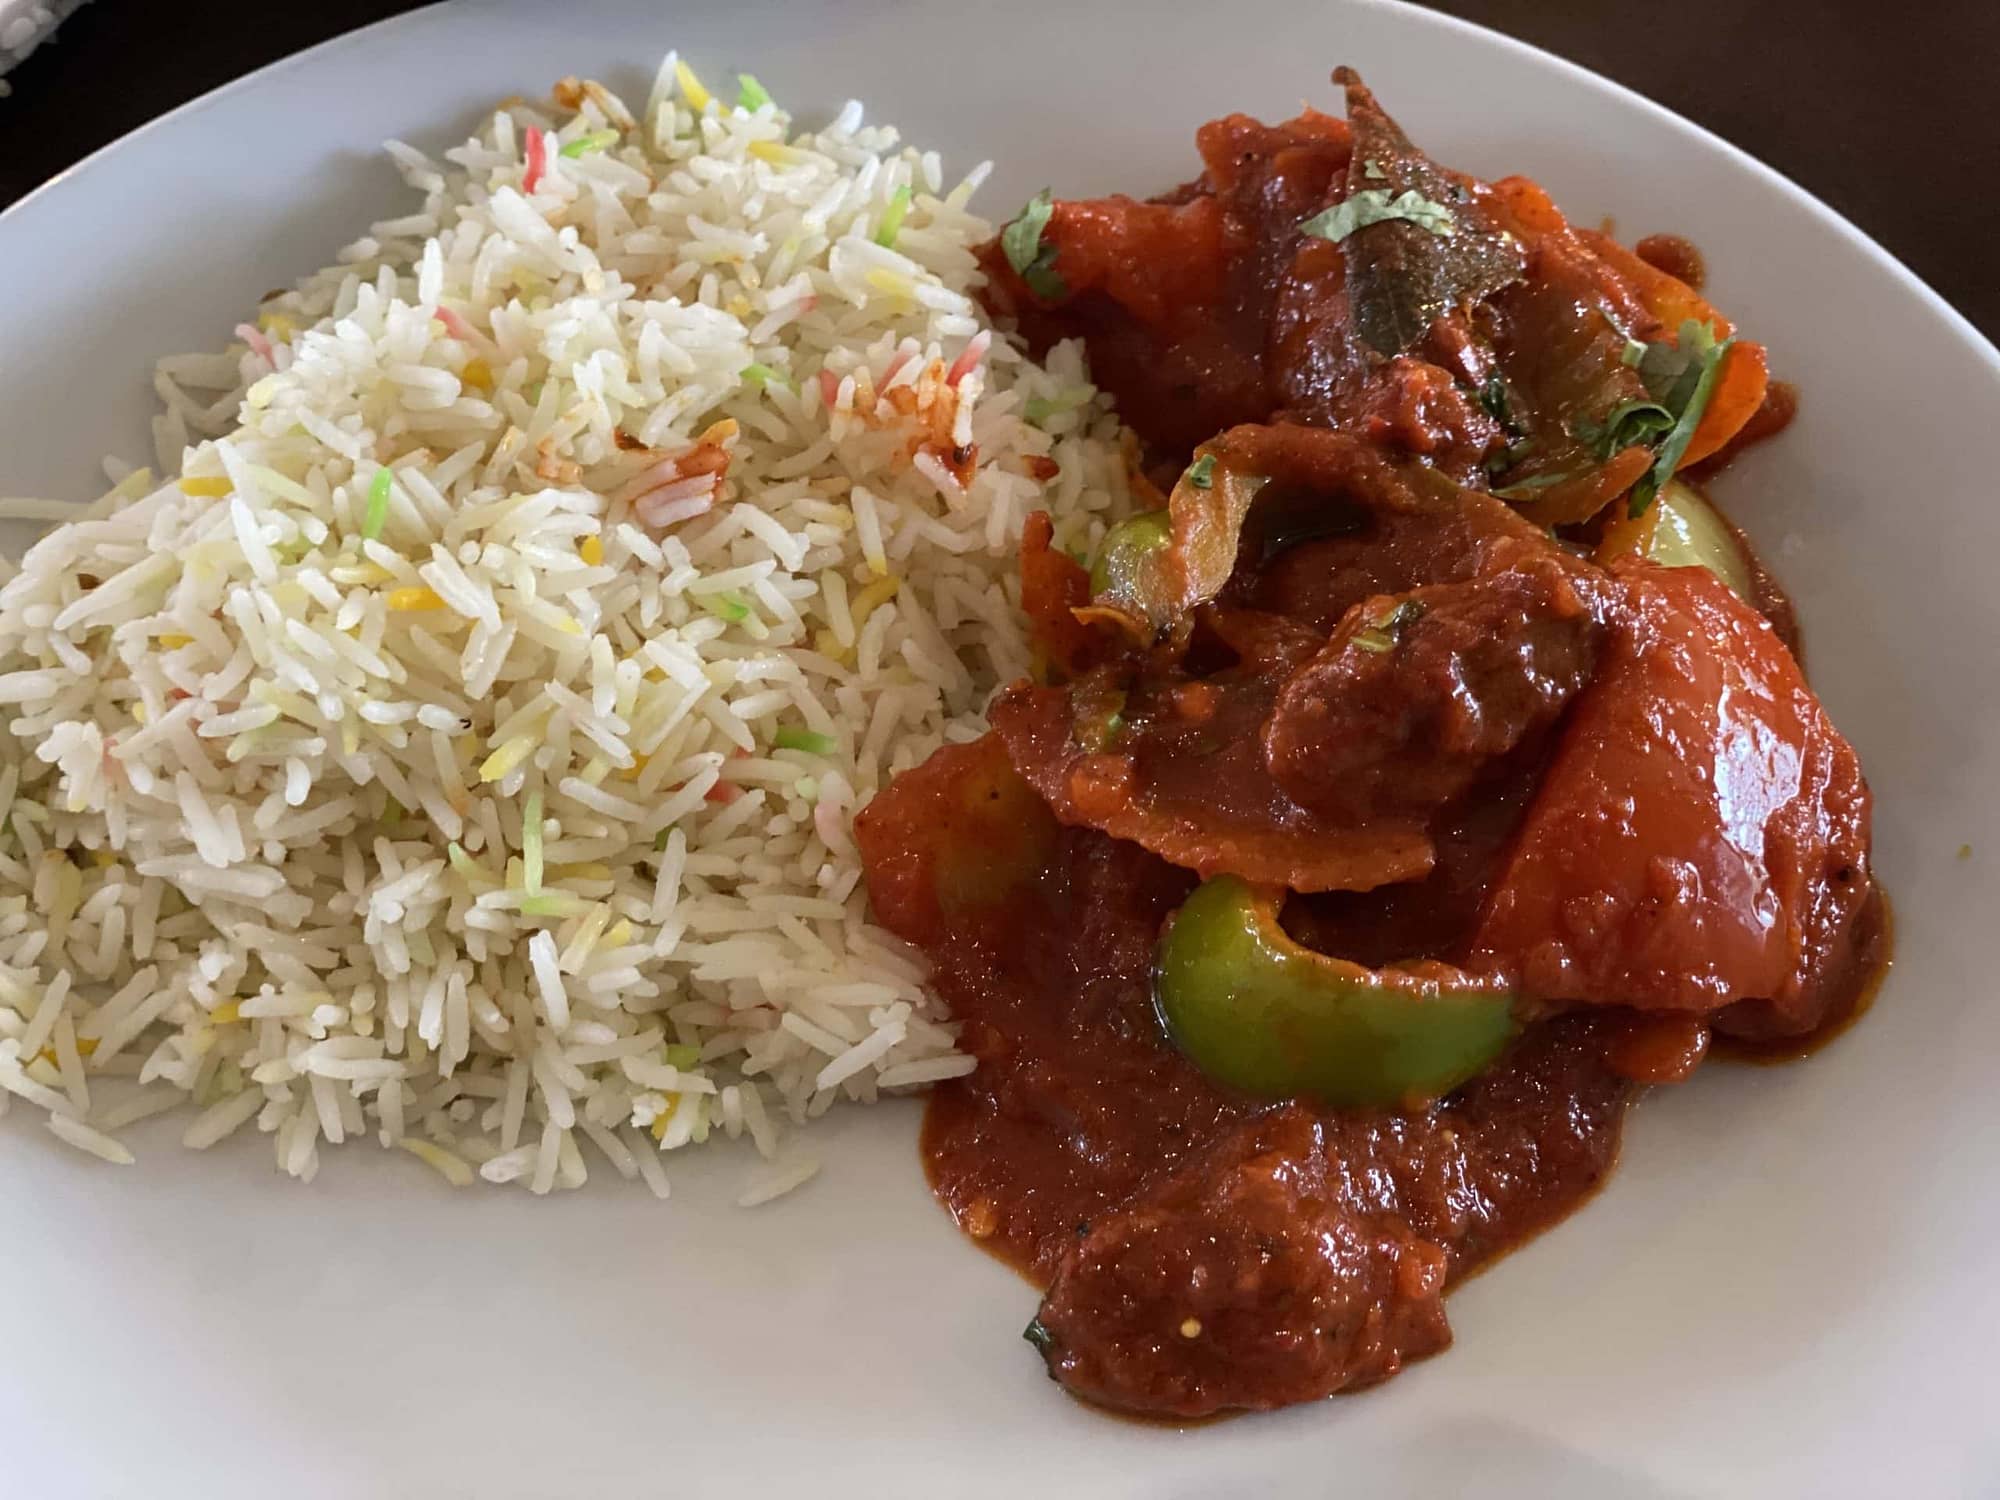 Lamb Balti & Pilau Rice at Bombay 8 Restaurant